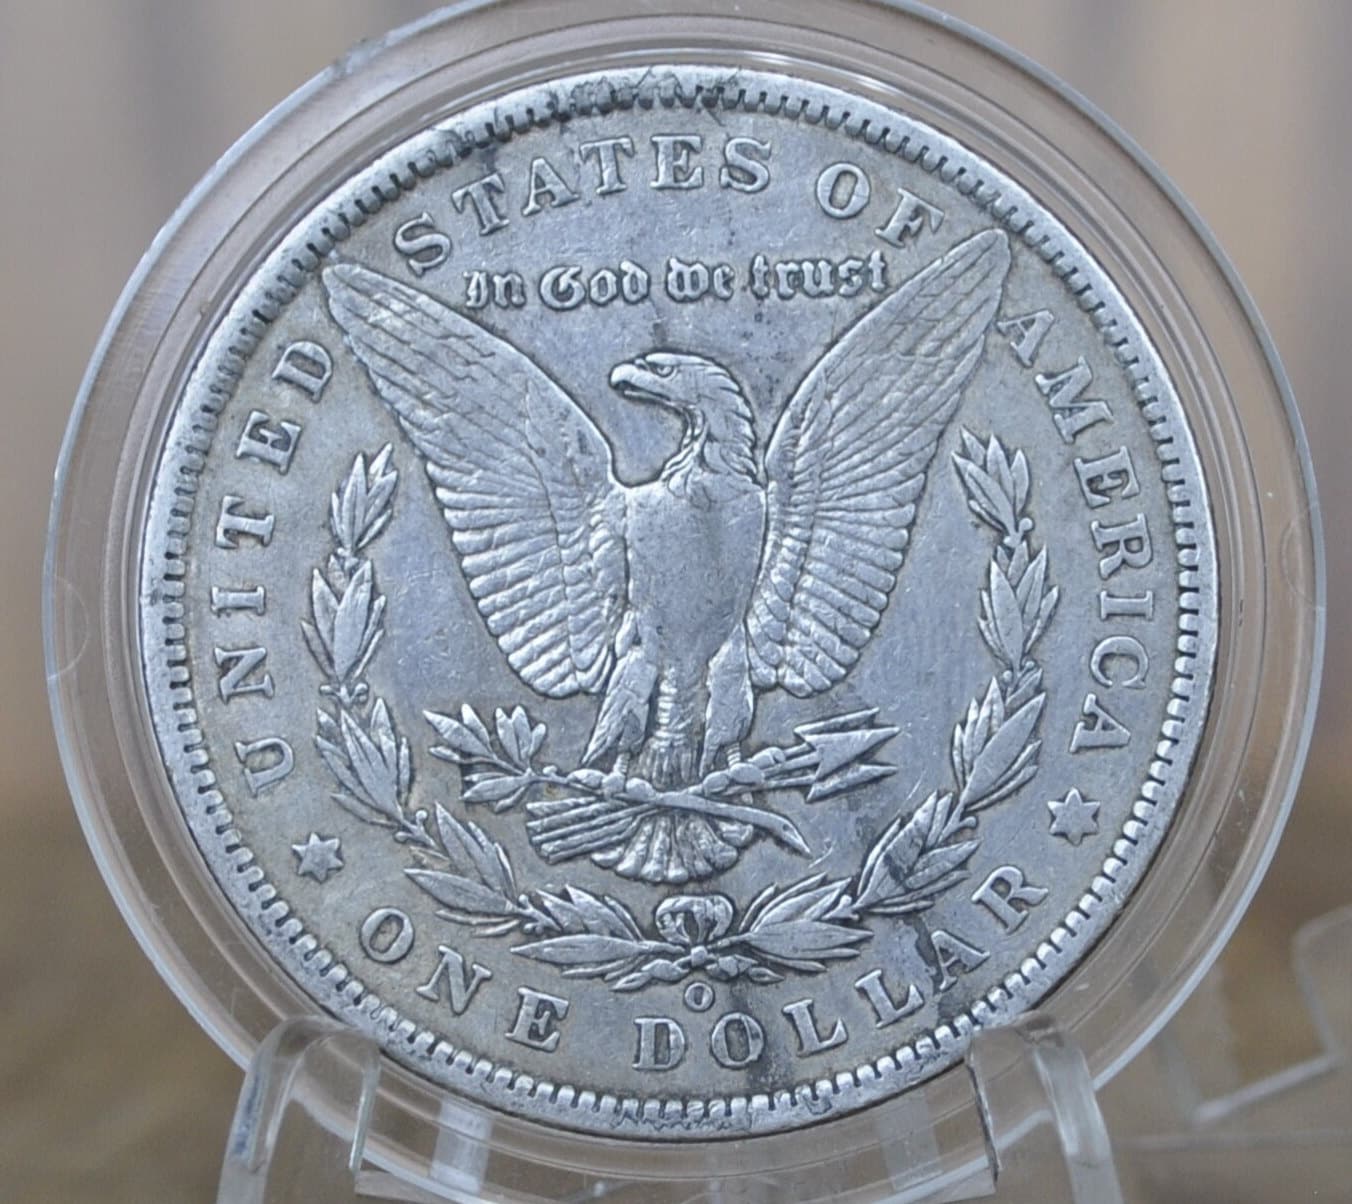 1897-O Morgan Silver Dollar - Choose by Grade / Condition - New Orleans Mint - 1897 O Silver Dollar - 1897 O Morgan Dollar - Better Date